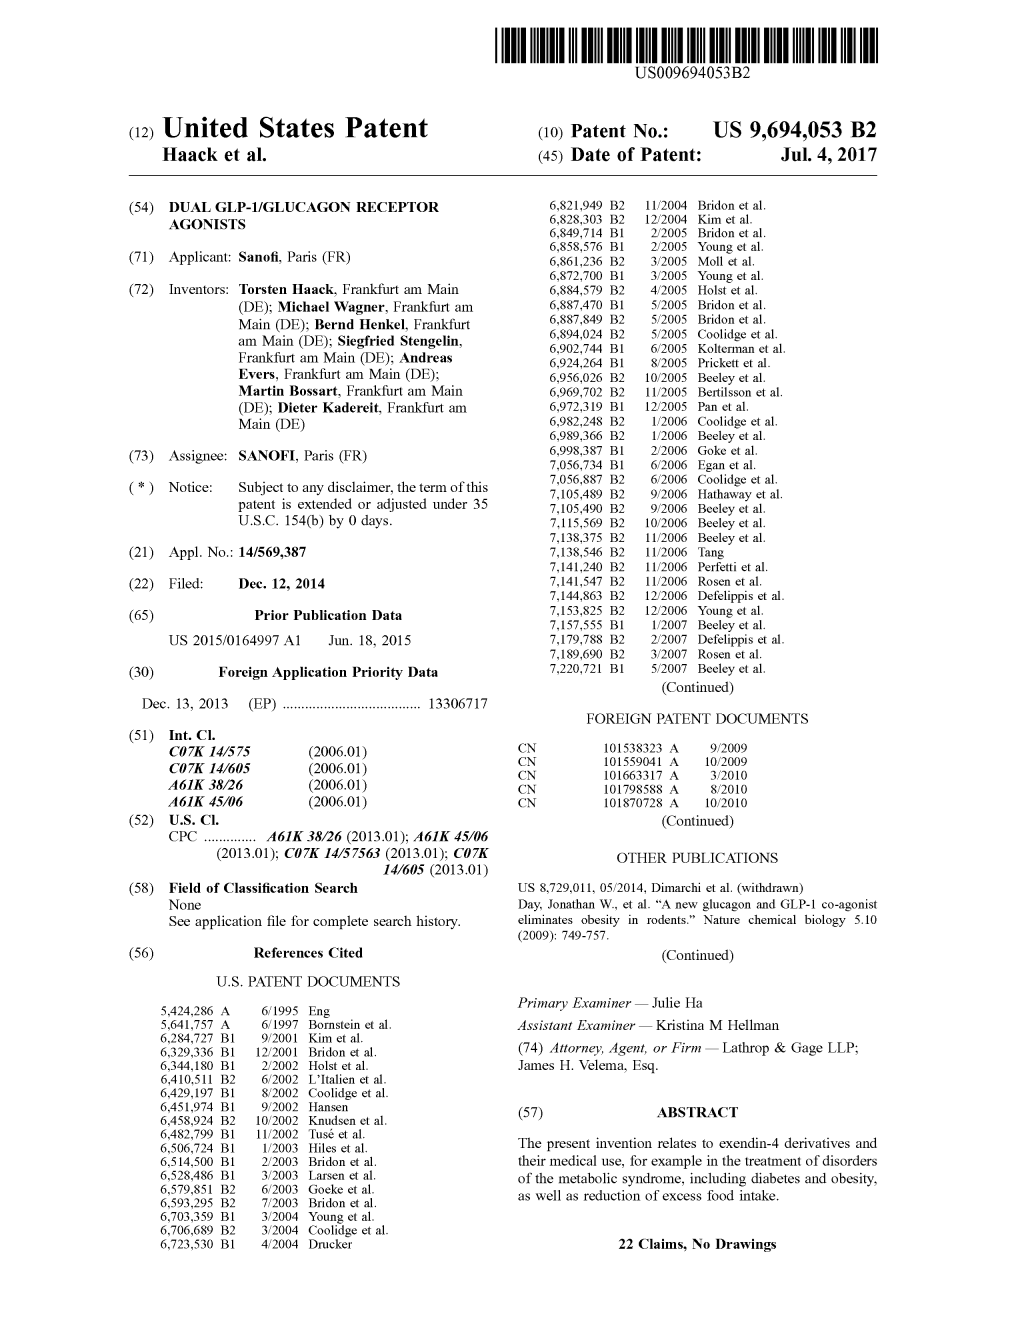 (12) United States Patent (10) Patent No.: US 9,694,053 B2 Haack Et Al